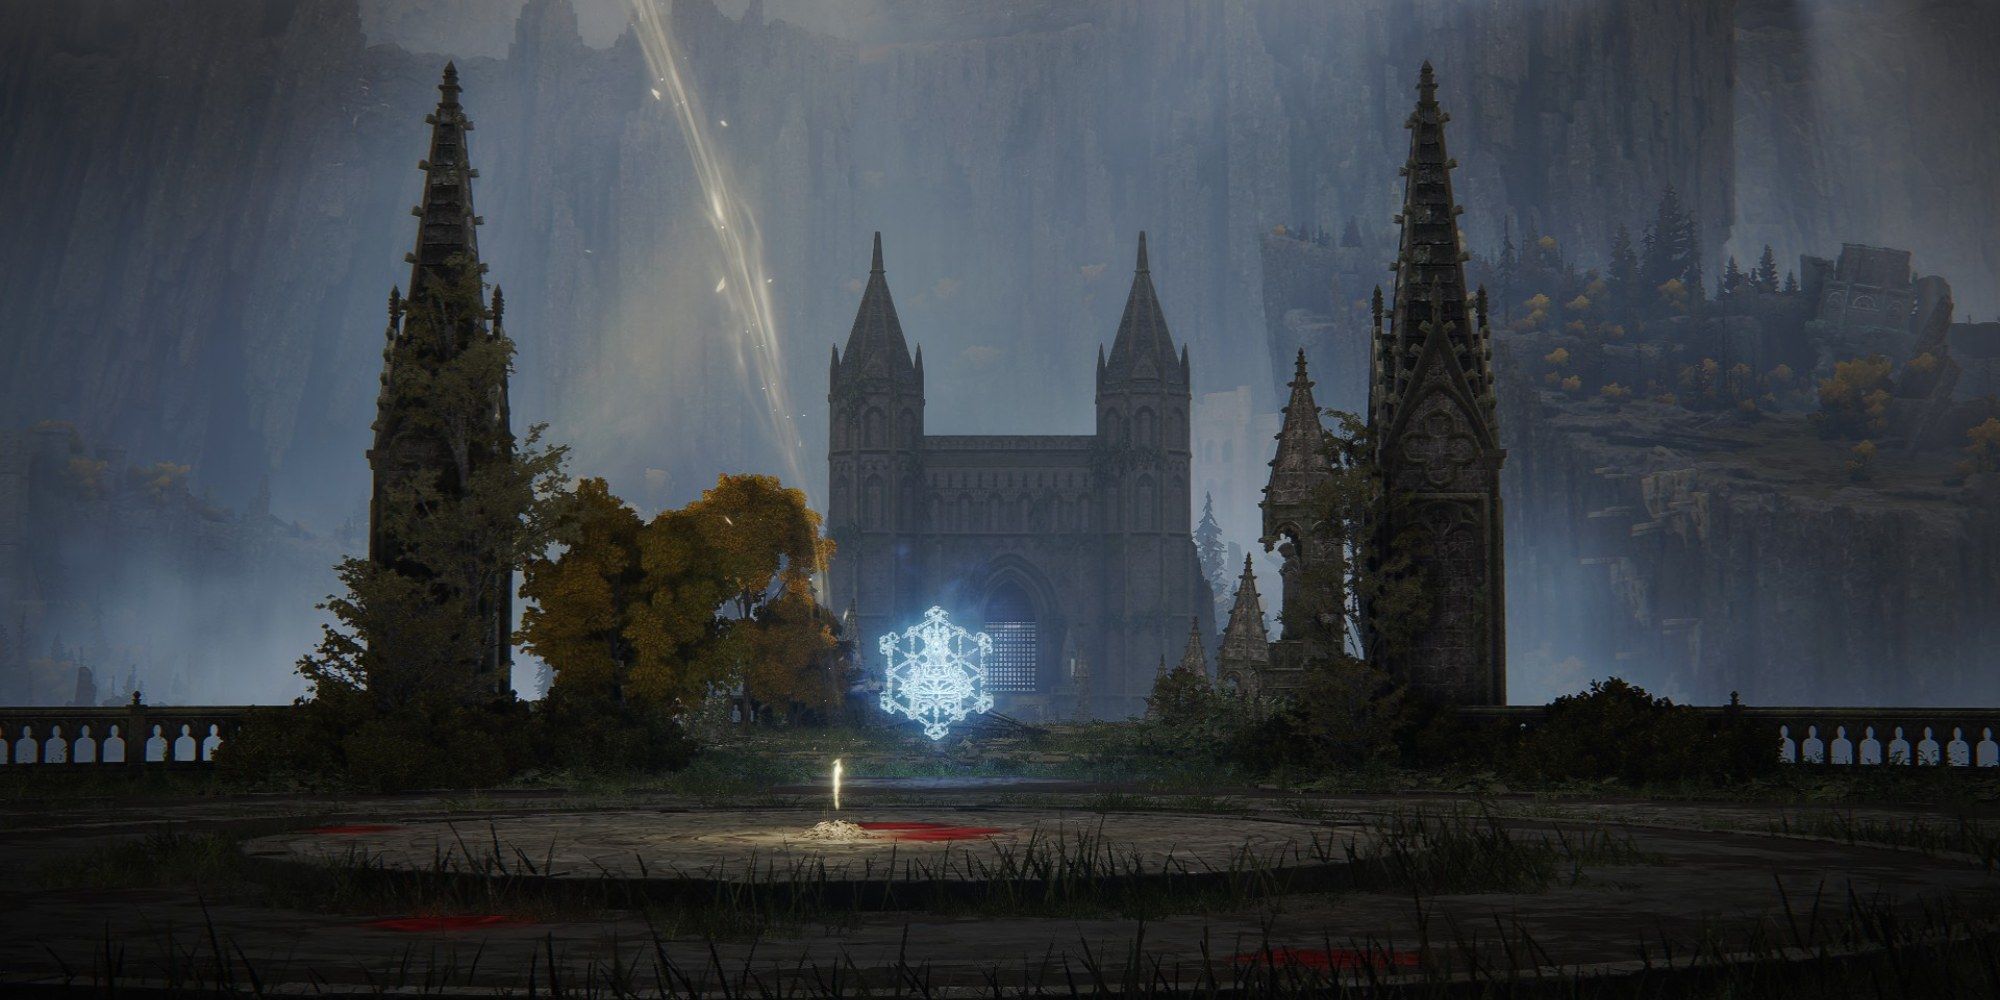 Elden Ring screenshot of Raya Lucaria's Eastern Gate.